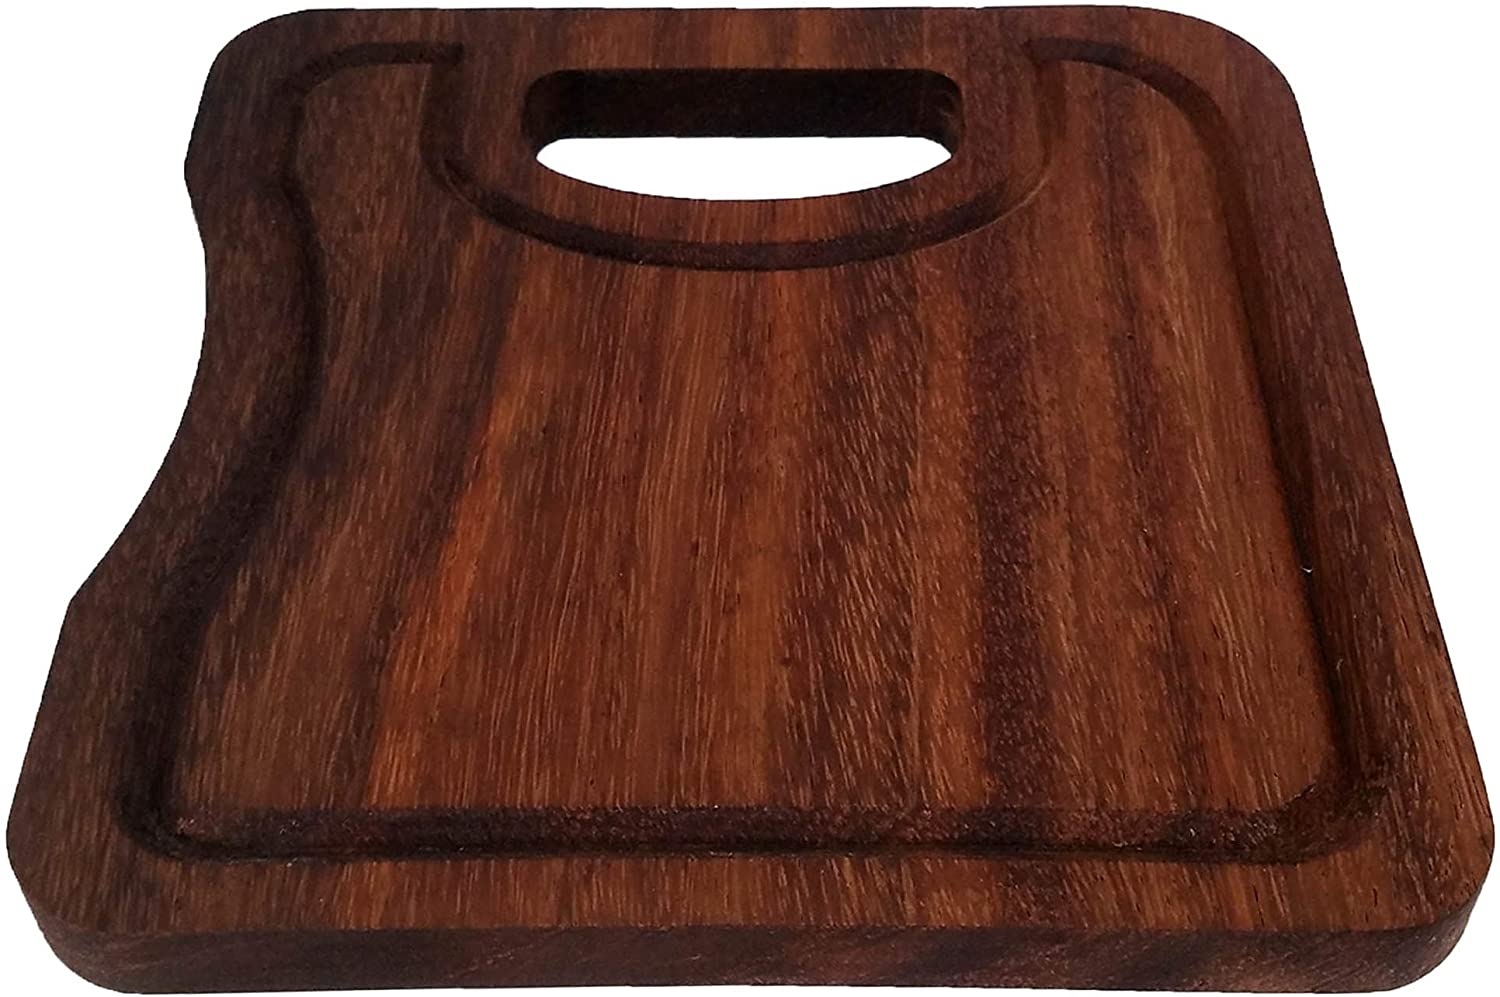 PRODUCTOS DE MADERA DE PAROTA / Small Parota Wood Serving/Cutting Board with Juice Groove